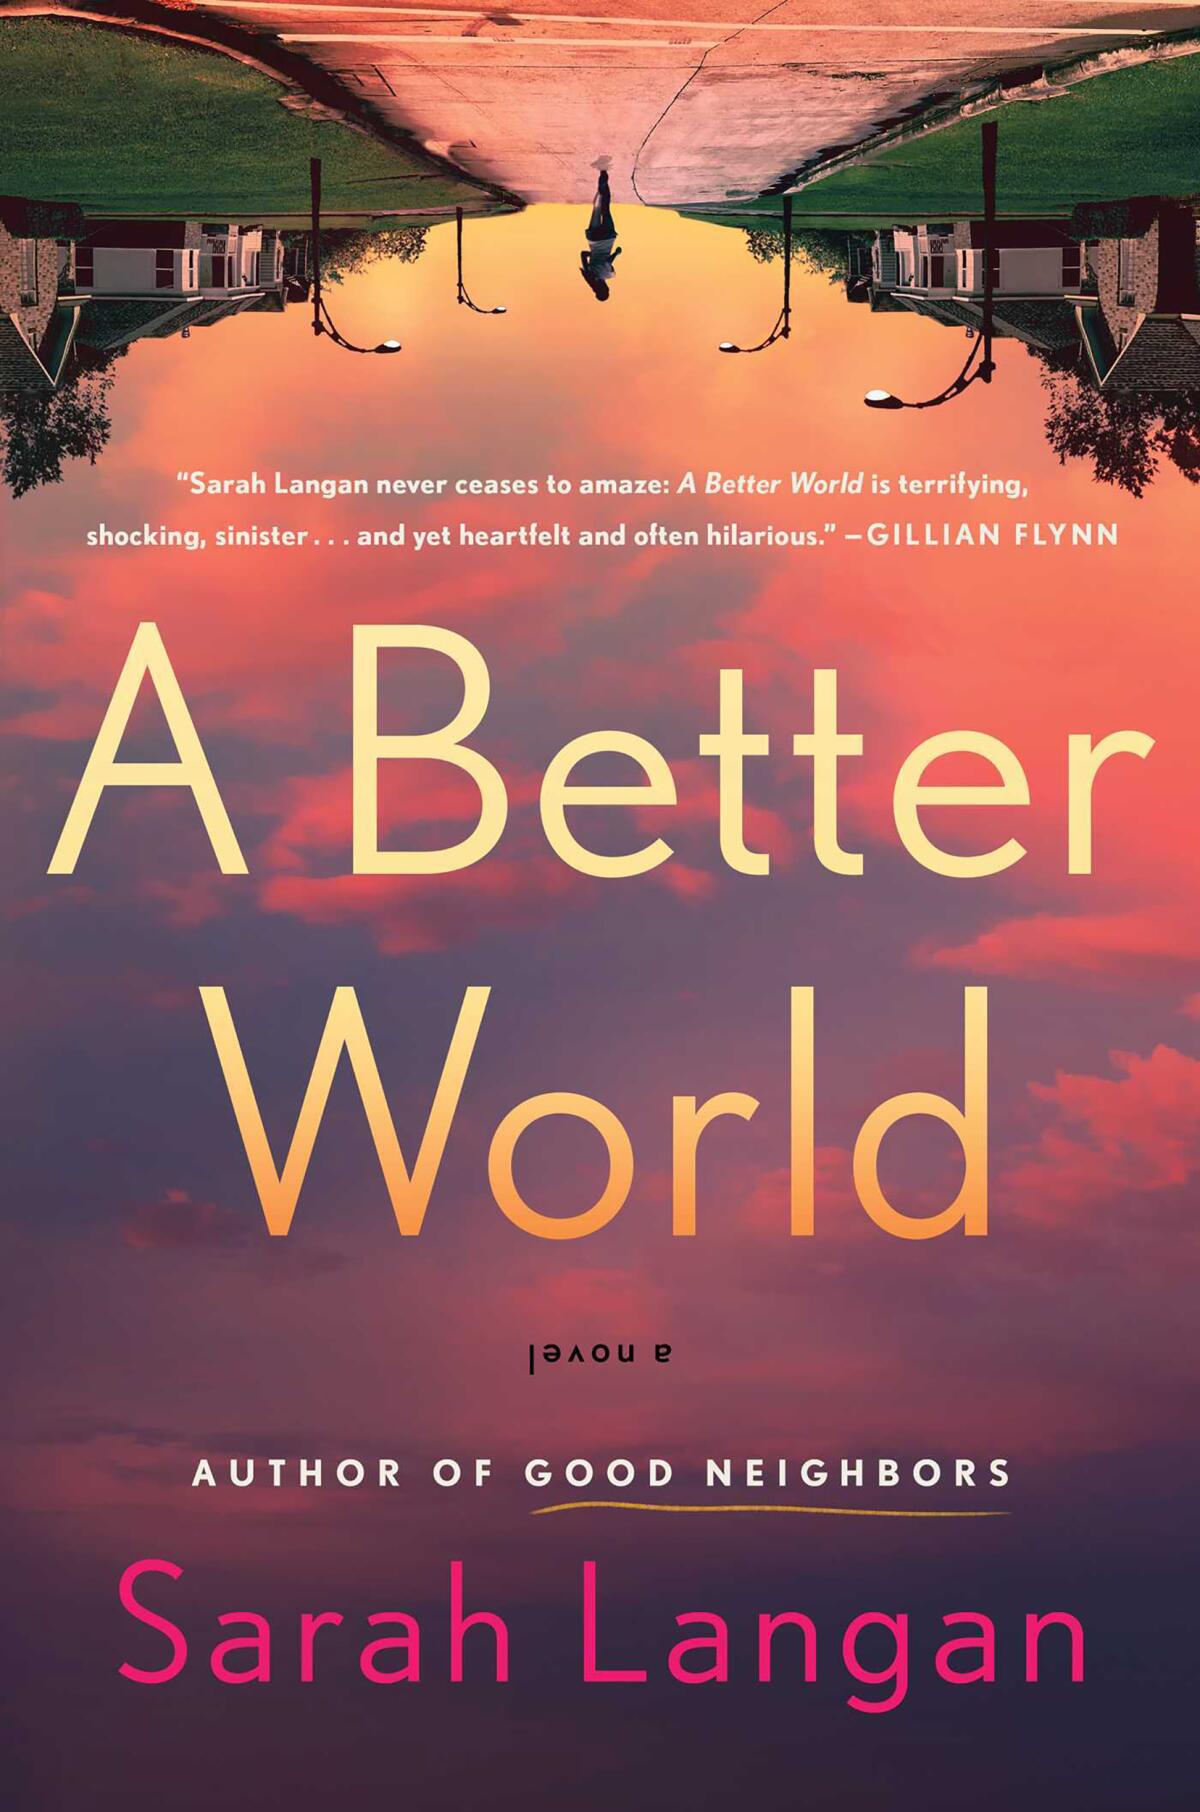 "A Better World" by Sarah Langan